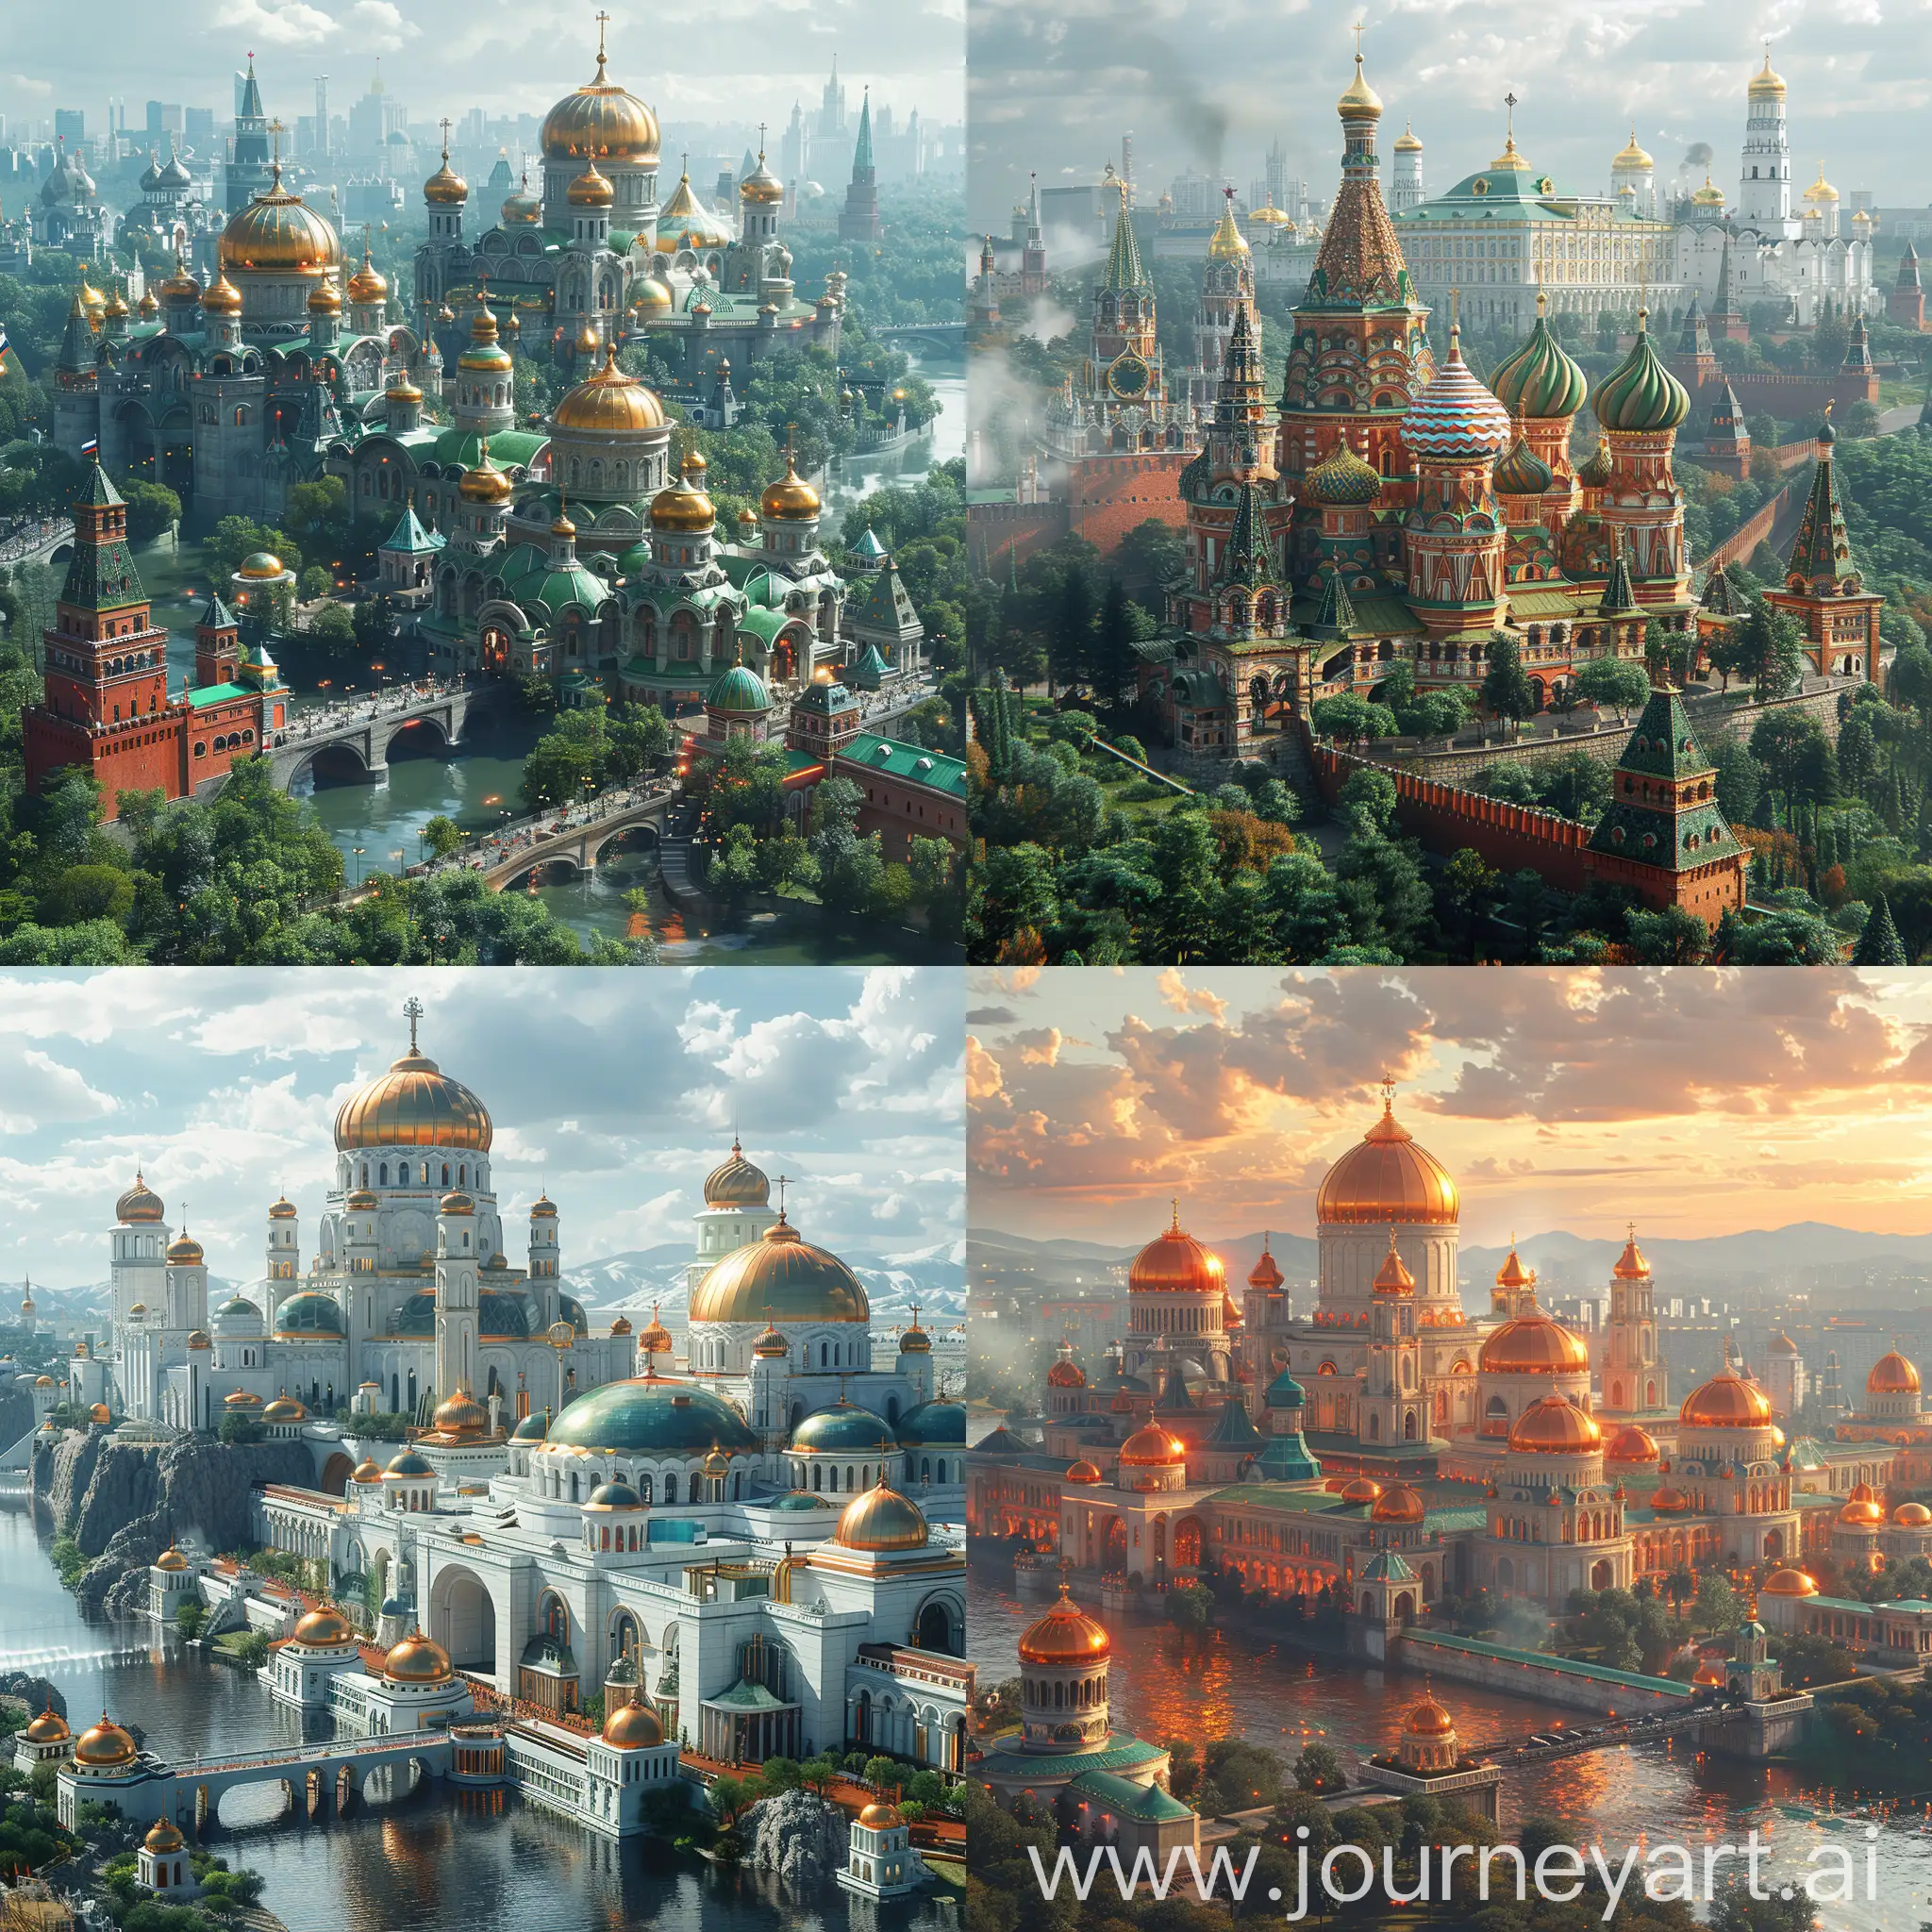 Futuristic-Moscow-Kremlin-UltraModern-Utopia-in-Blade-Runner-Style